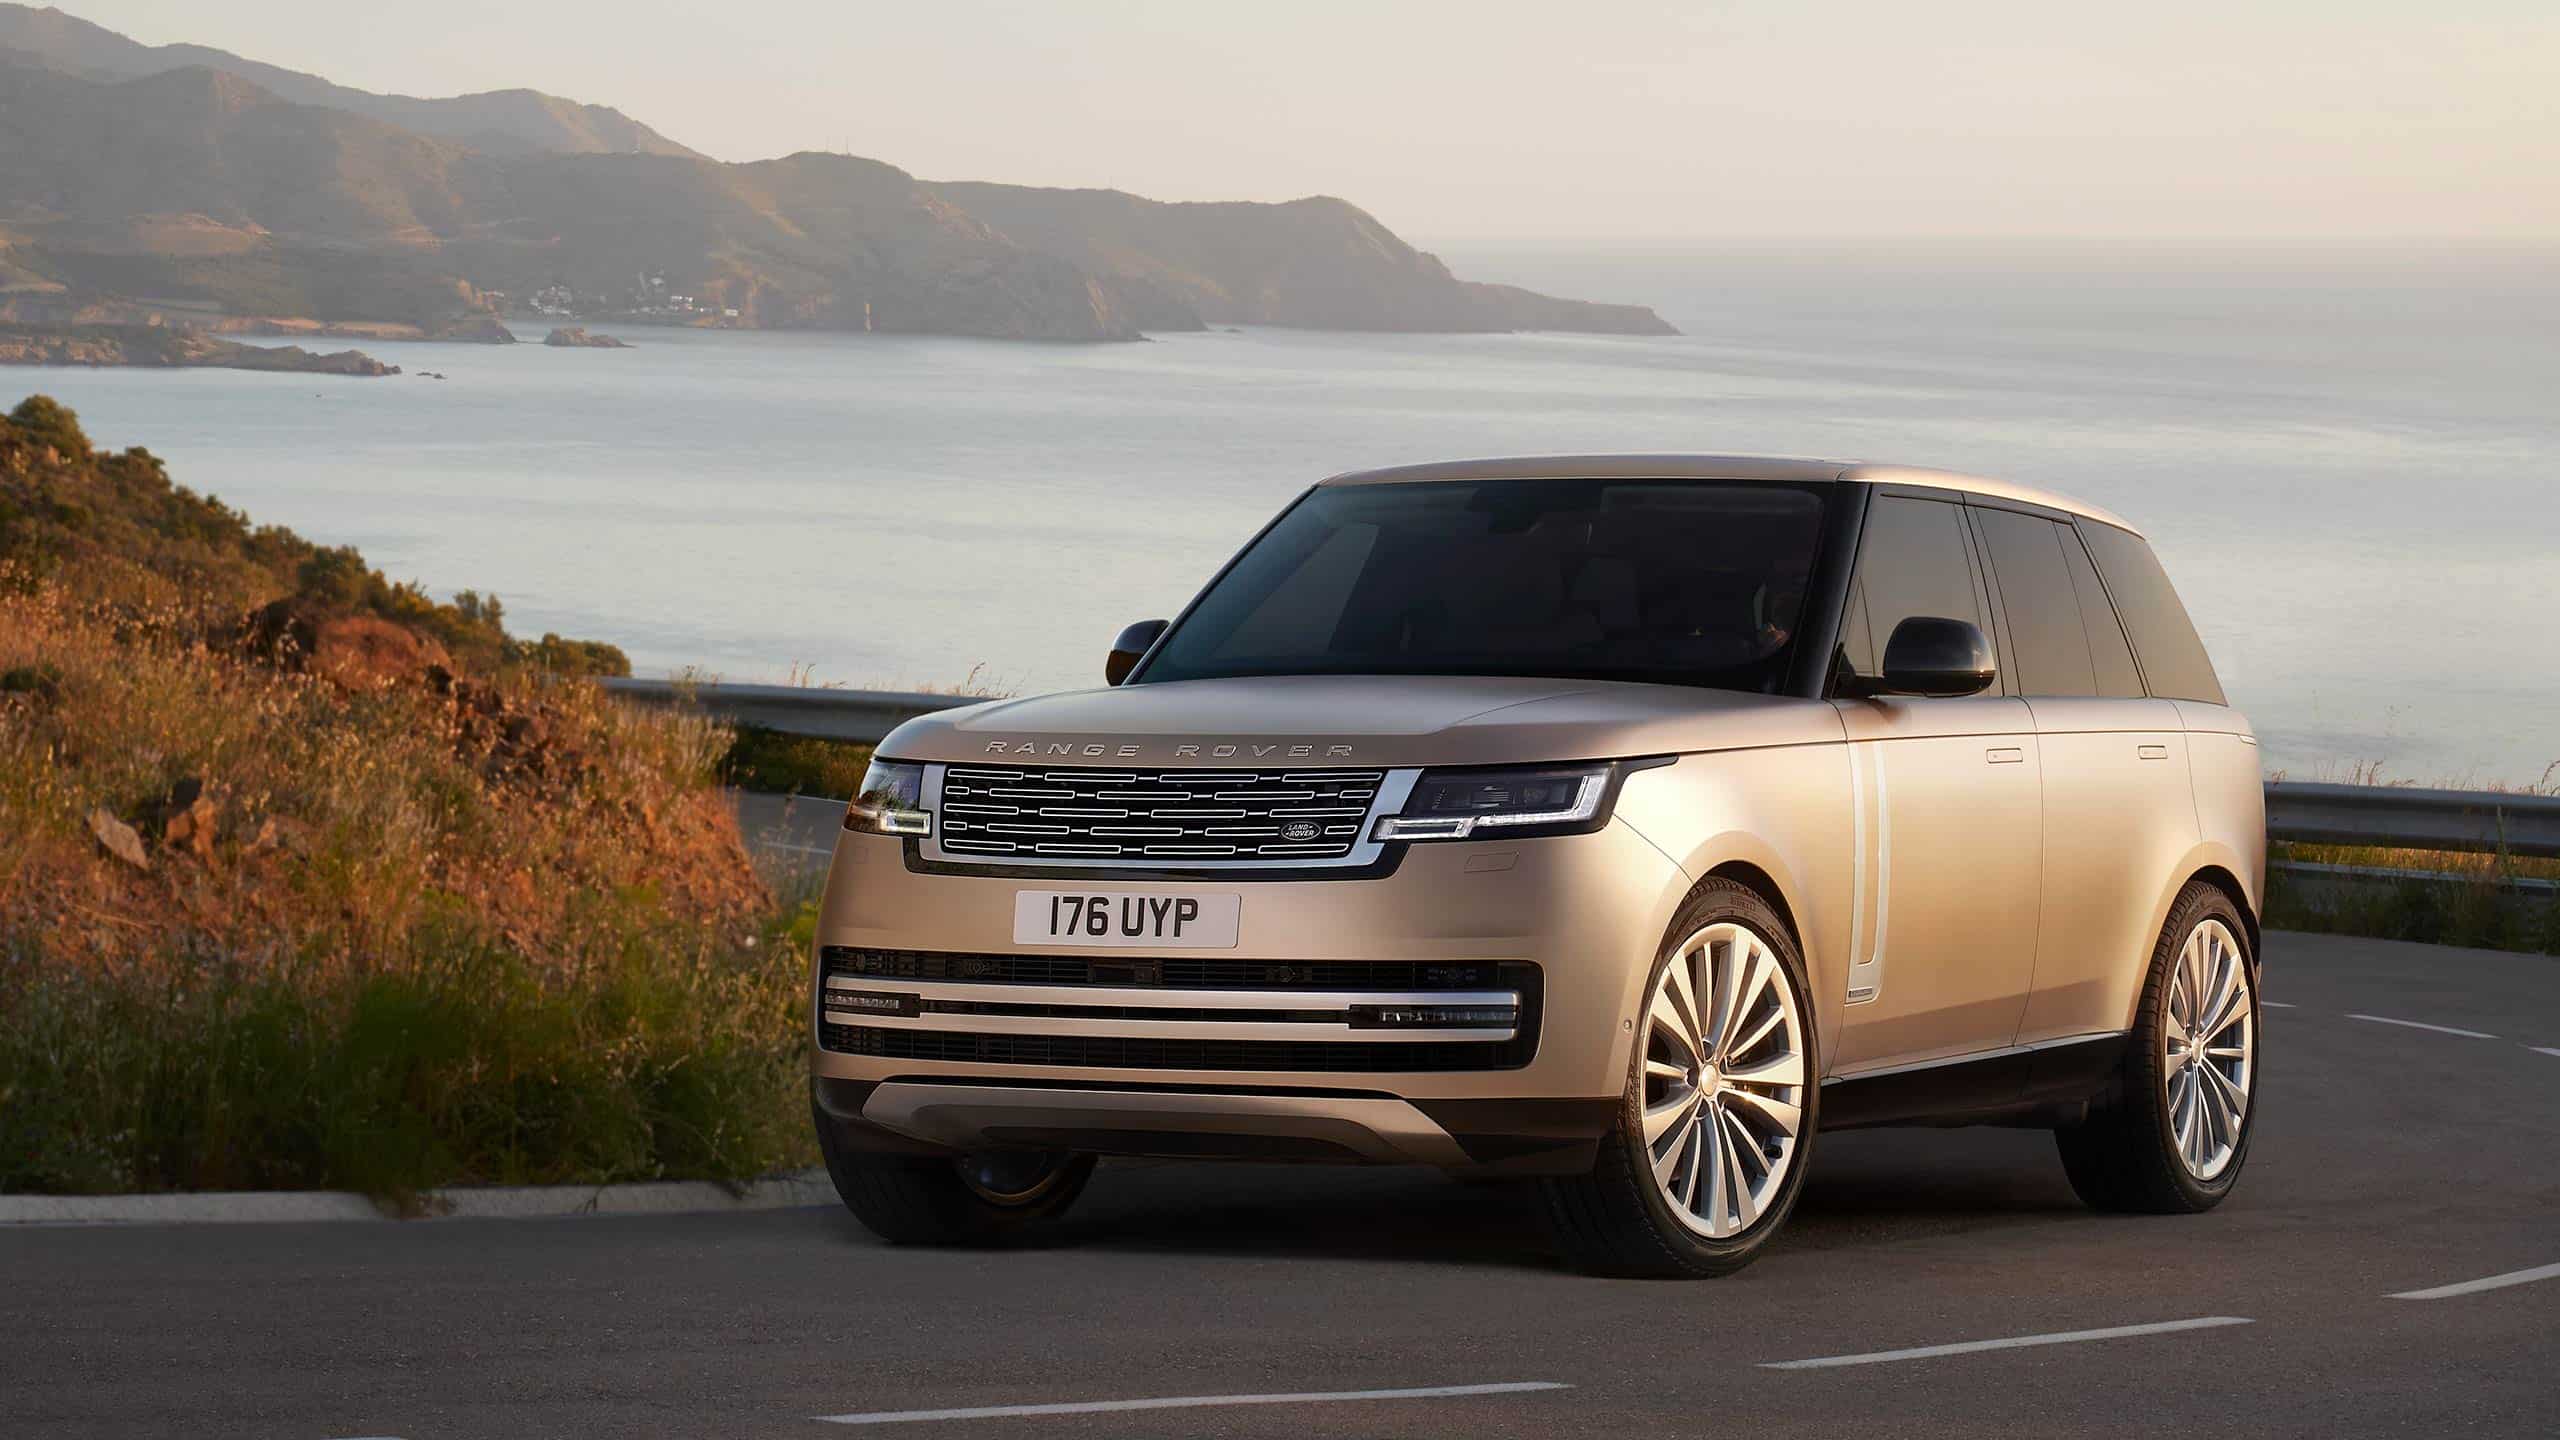 The New Range Rover driving along a coastal road